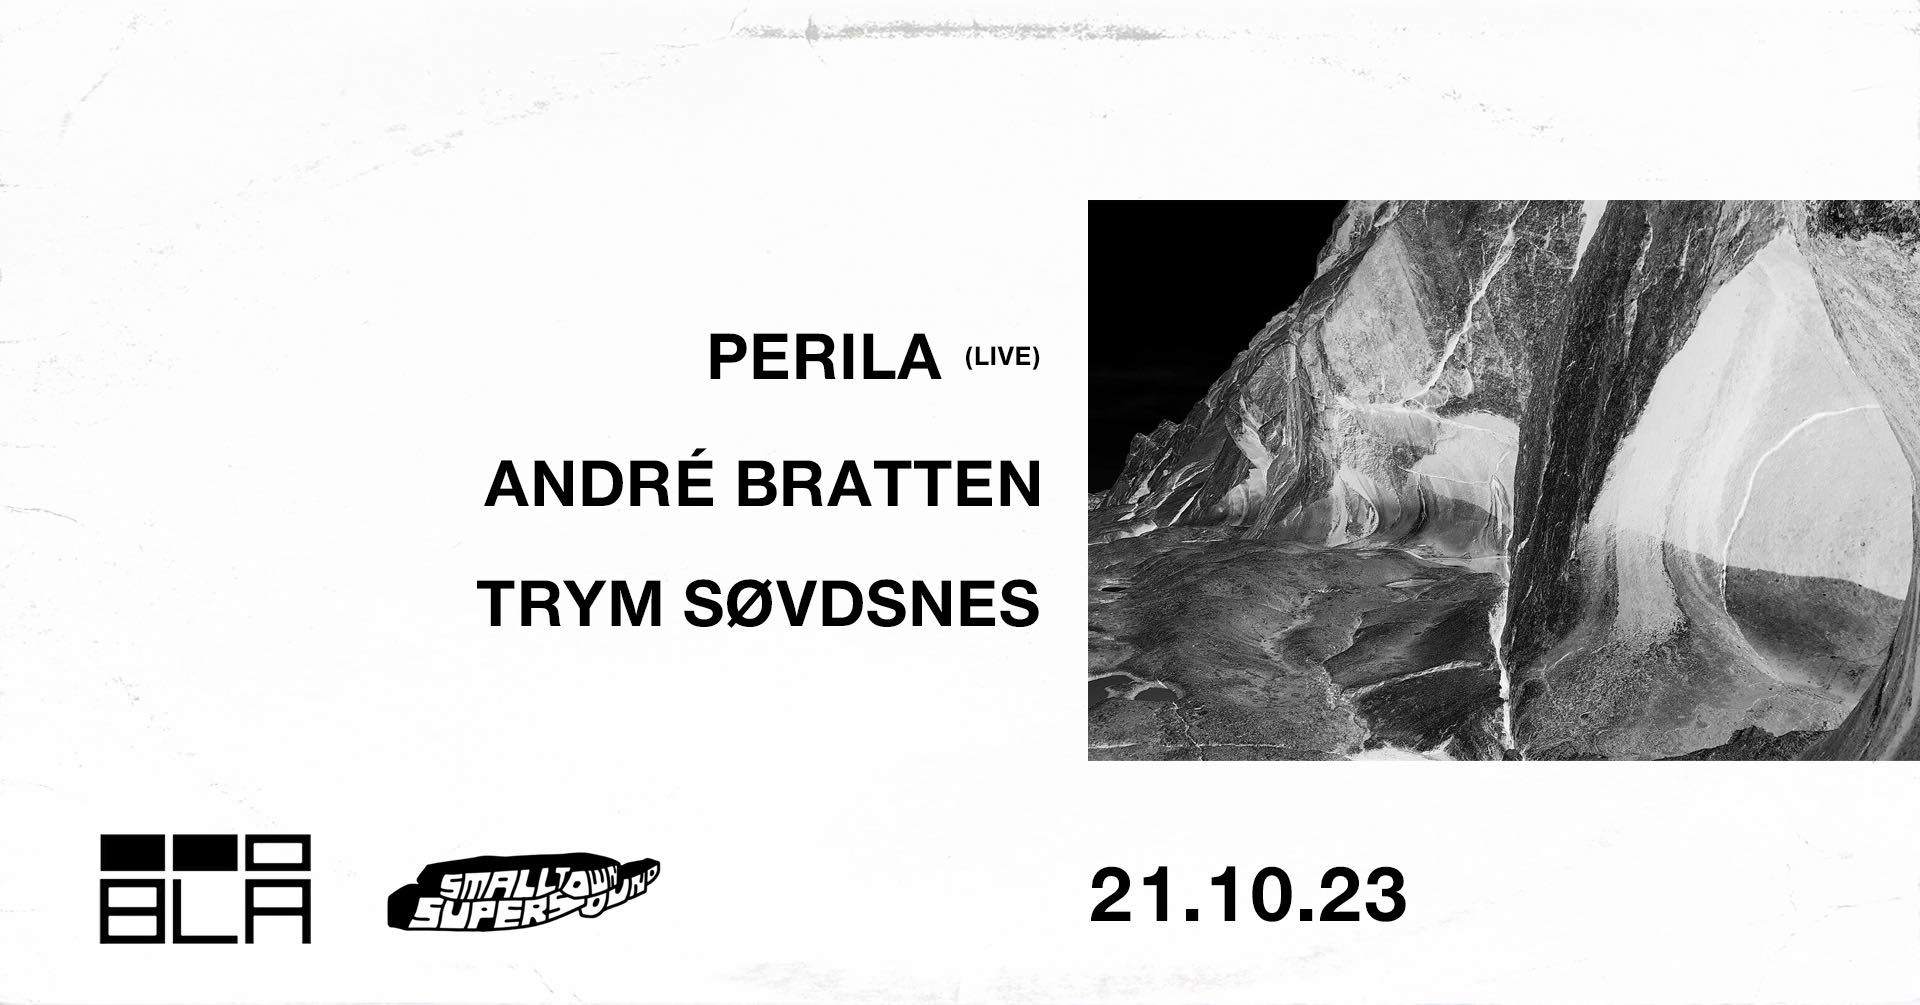 ANDRÉ BRATTEN + Perila + TRYM SØVDSNES (Smalltown Supersound) - フライヤー表